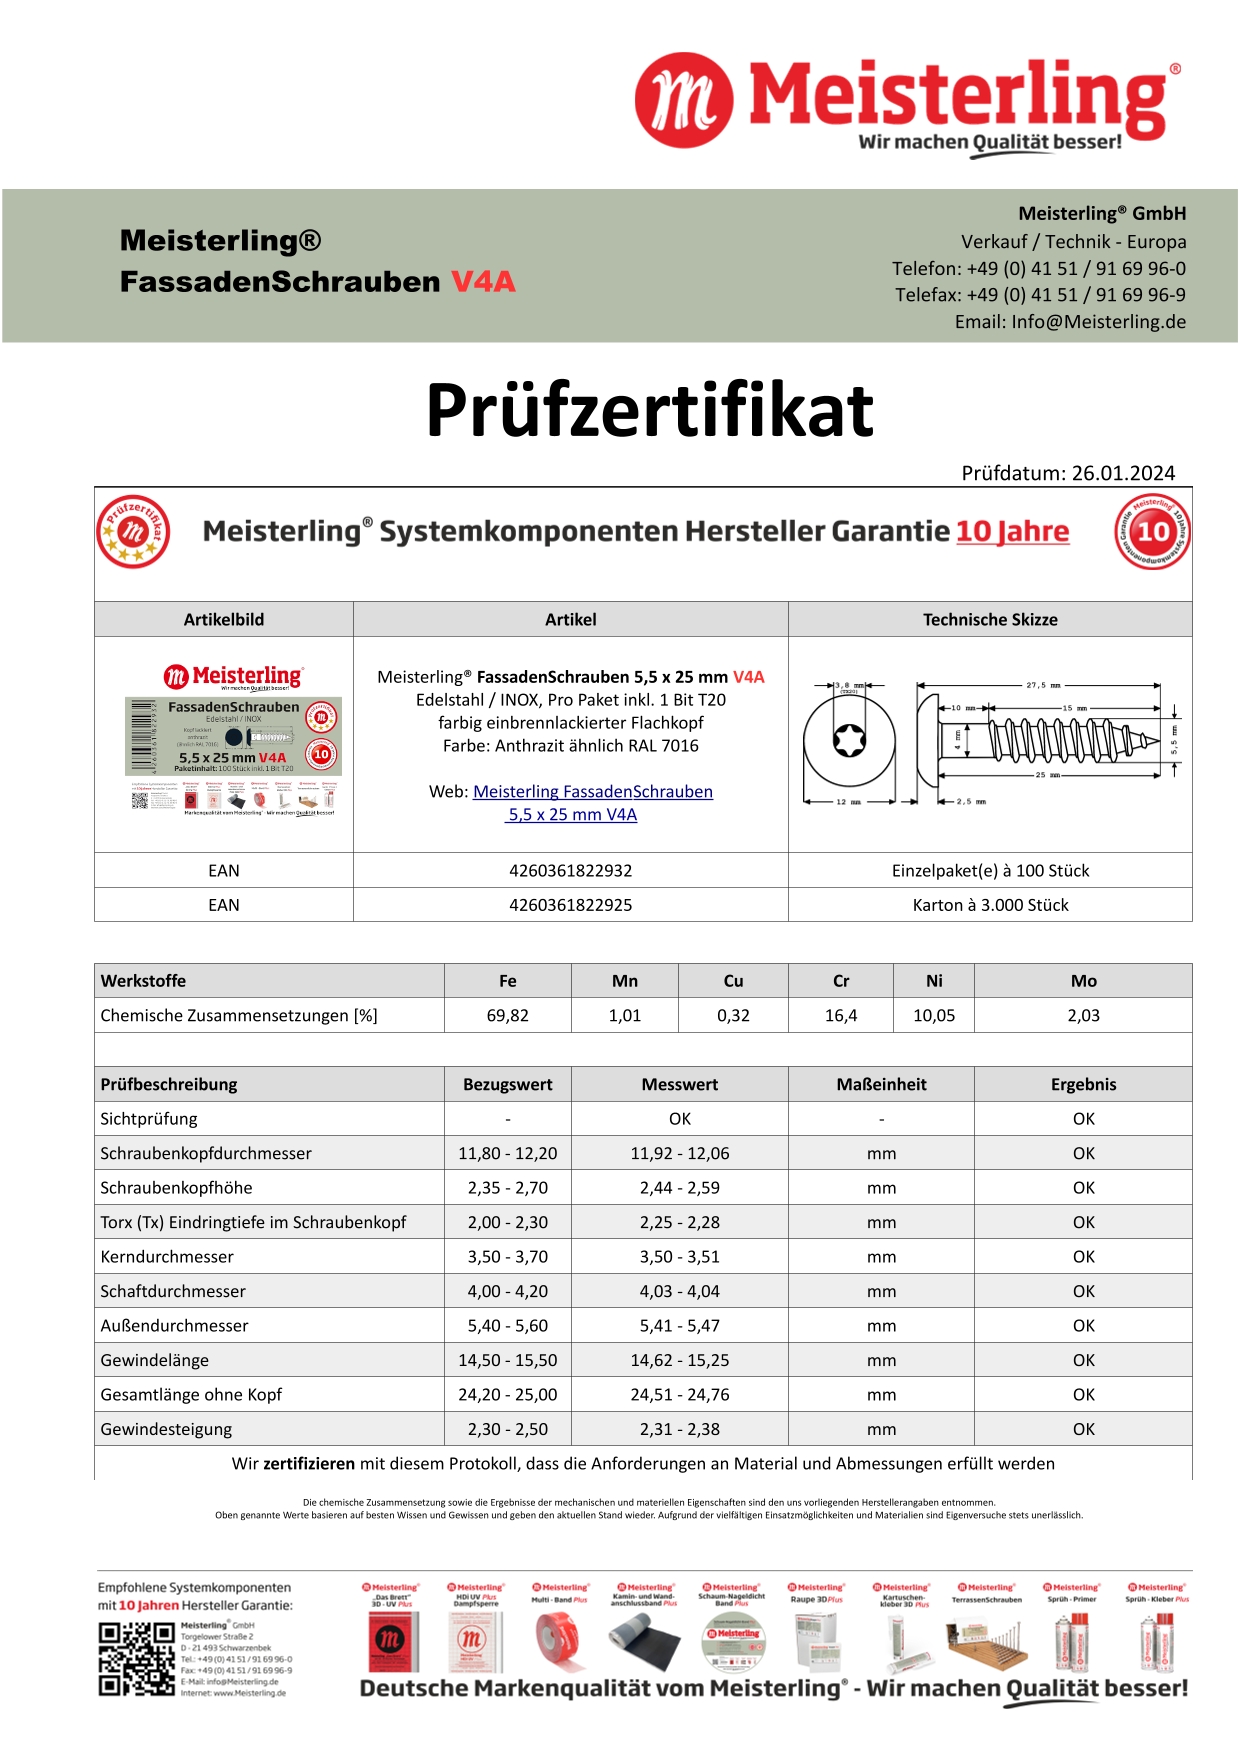 Prüfzertifikat Meisterling® FassadenSchrauben 5,5 x 25 mm V4a anthrazit